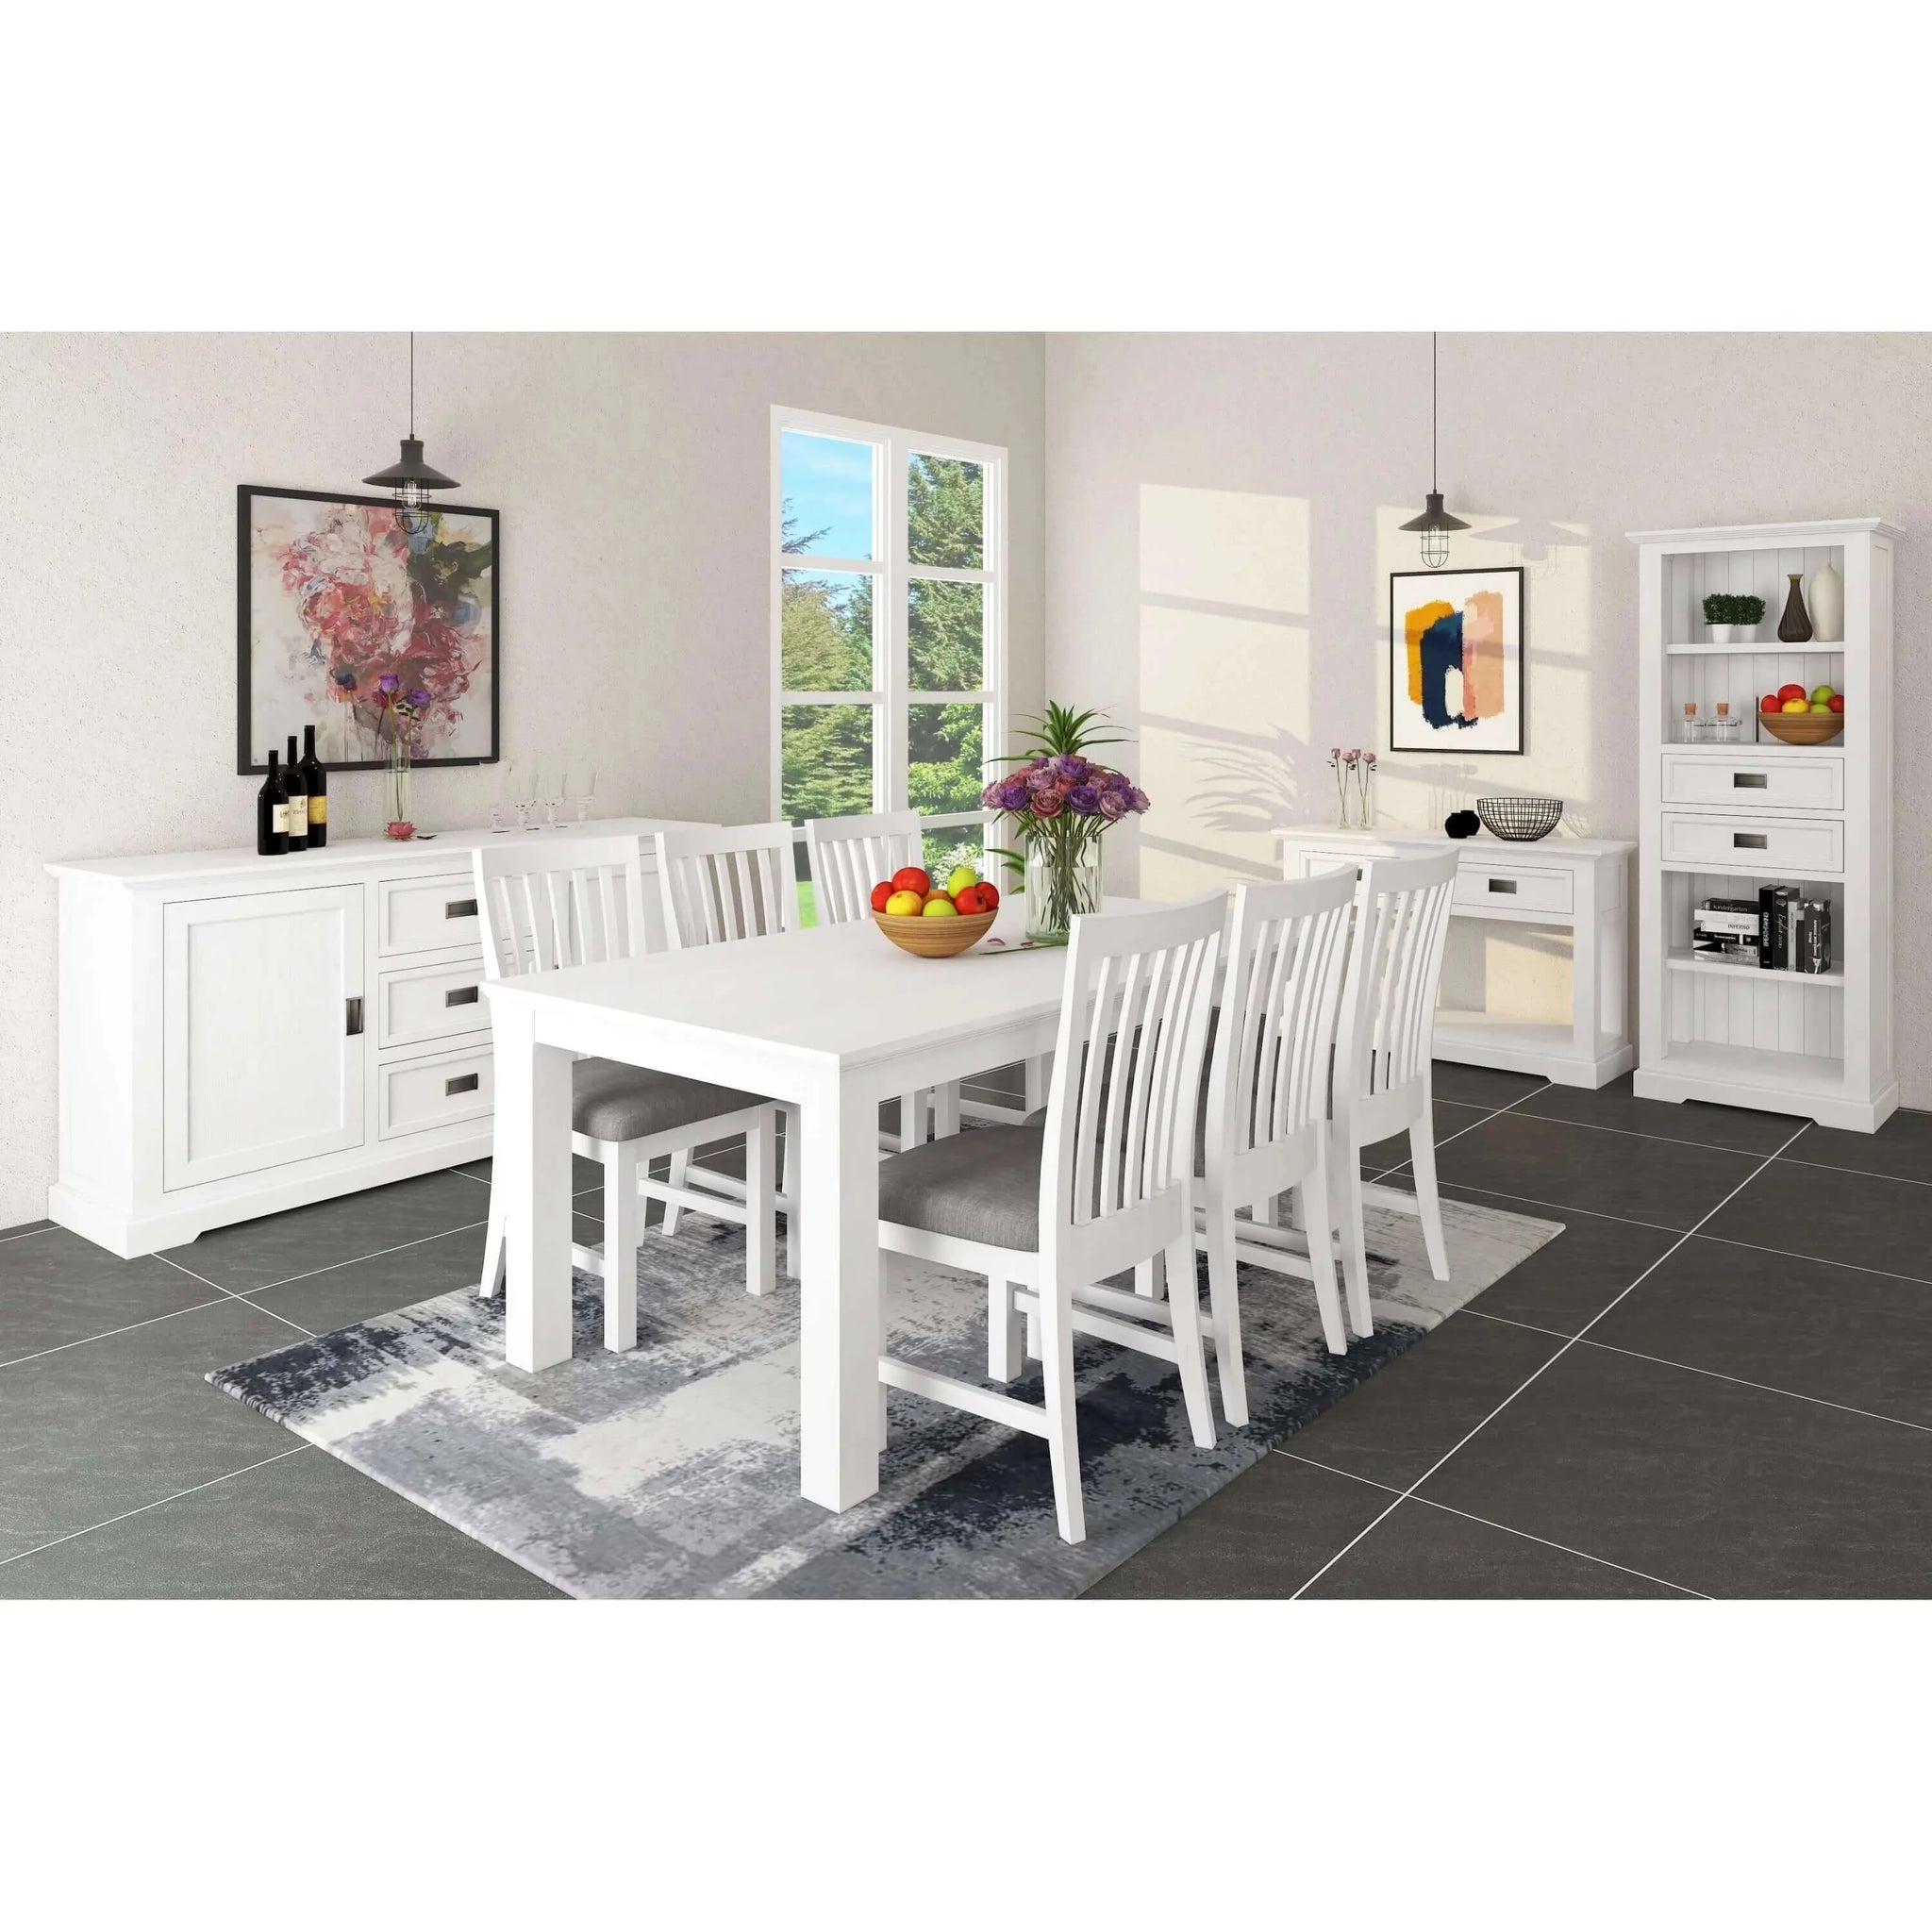 Buy laelia buffet table 166cm 2 door 3 drawer acacia wood coastal furniture -white - upinteriors-Upinteriors